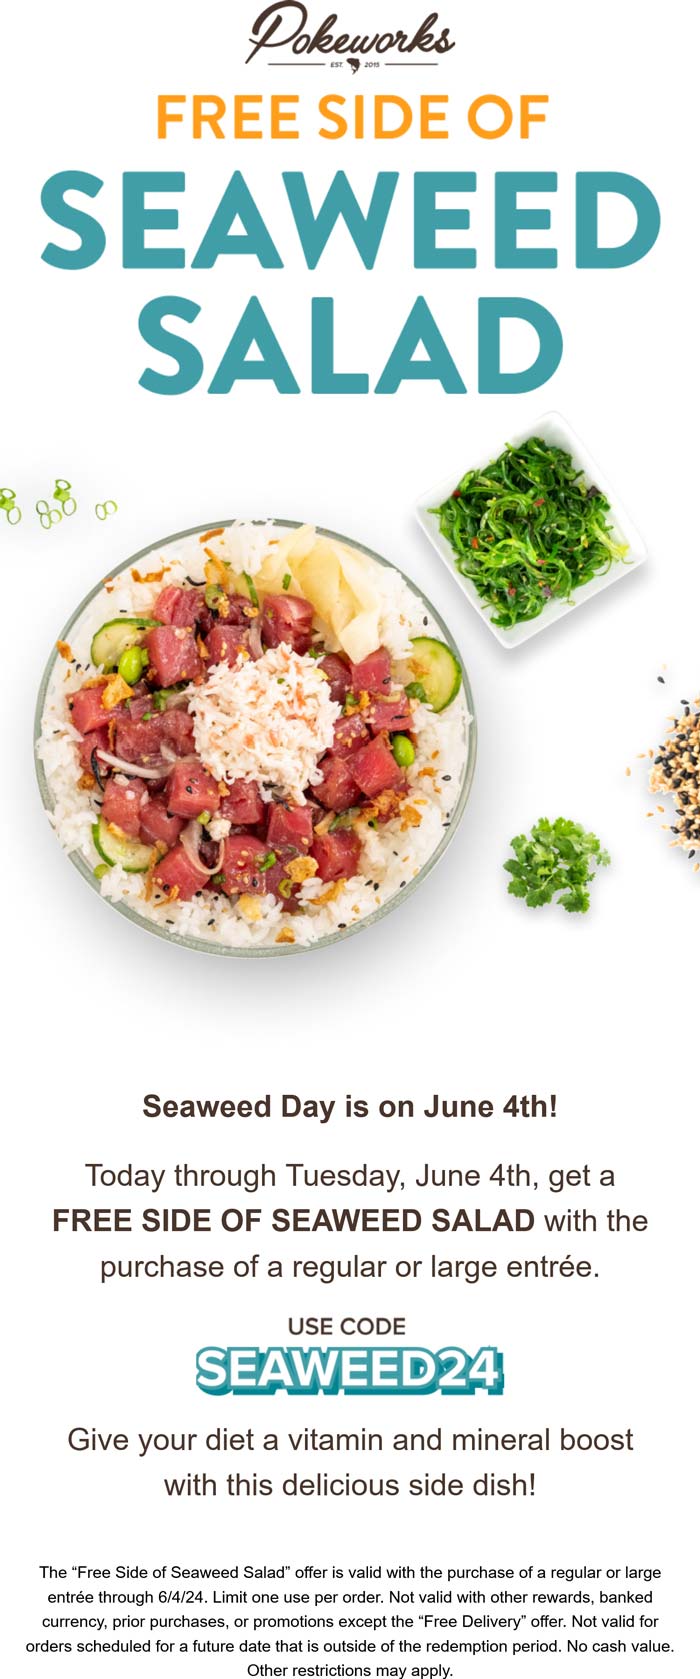 Pokeworks restaurants Coupon  Free side of seaweed salad with your entree at Pokeworks via promo code SEAWEED24 #pokeworks 